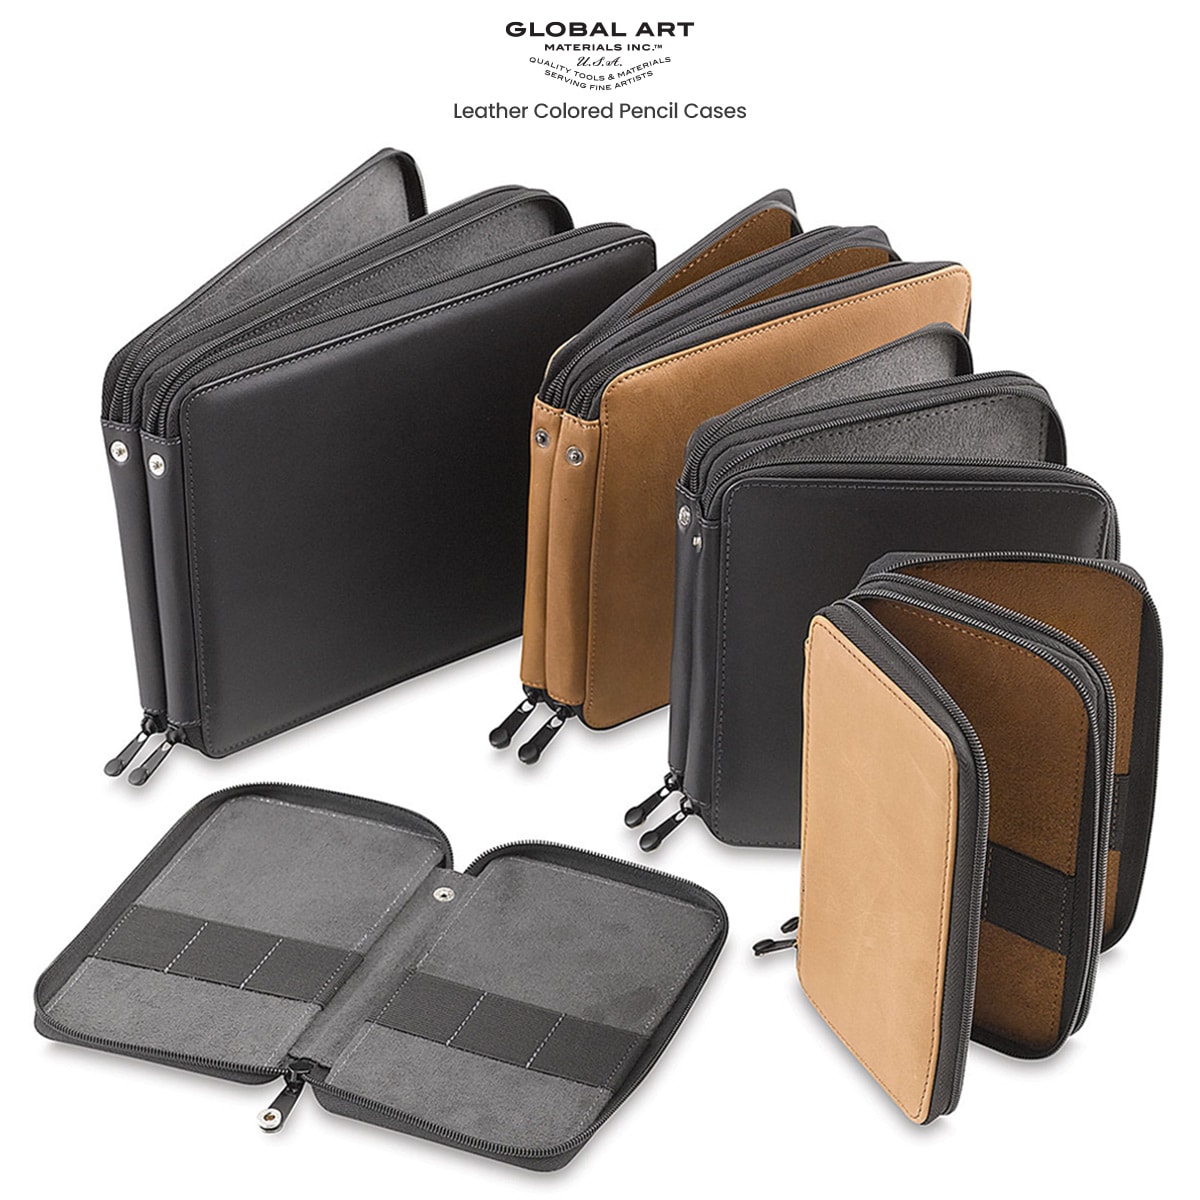 https://www.jerrysartarama.com/media/catalog/product/g/l/global-arts-leather-pencil-cases-main.jpg